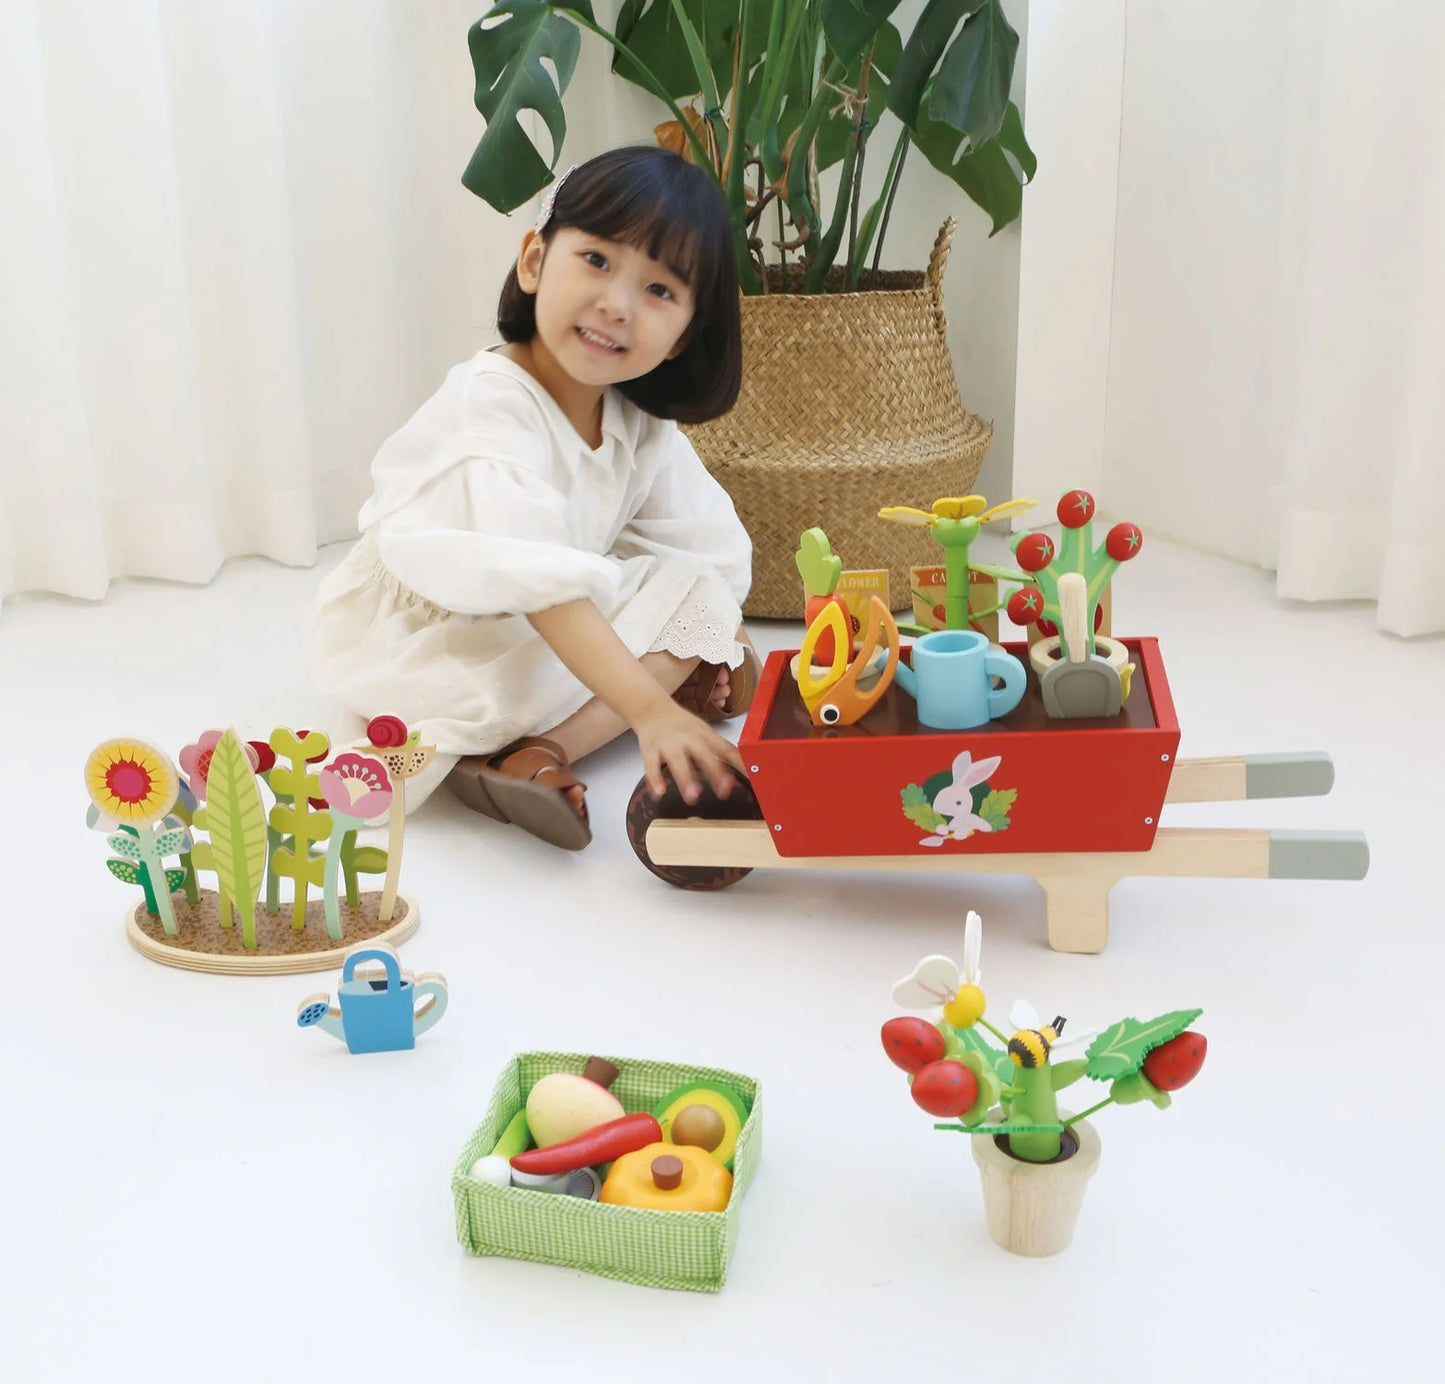 - Garden Wheelbarrow Set - Deluxe Garden Pretend Play Wooden Toy Set for Gardening - Educational, Creative and Imaginative Fun in Garden for Children 3+ TL8357